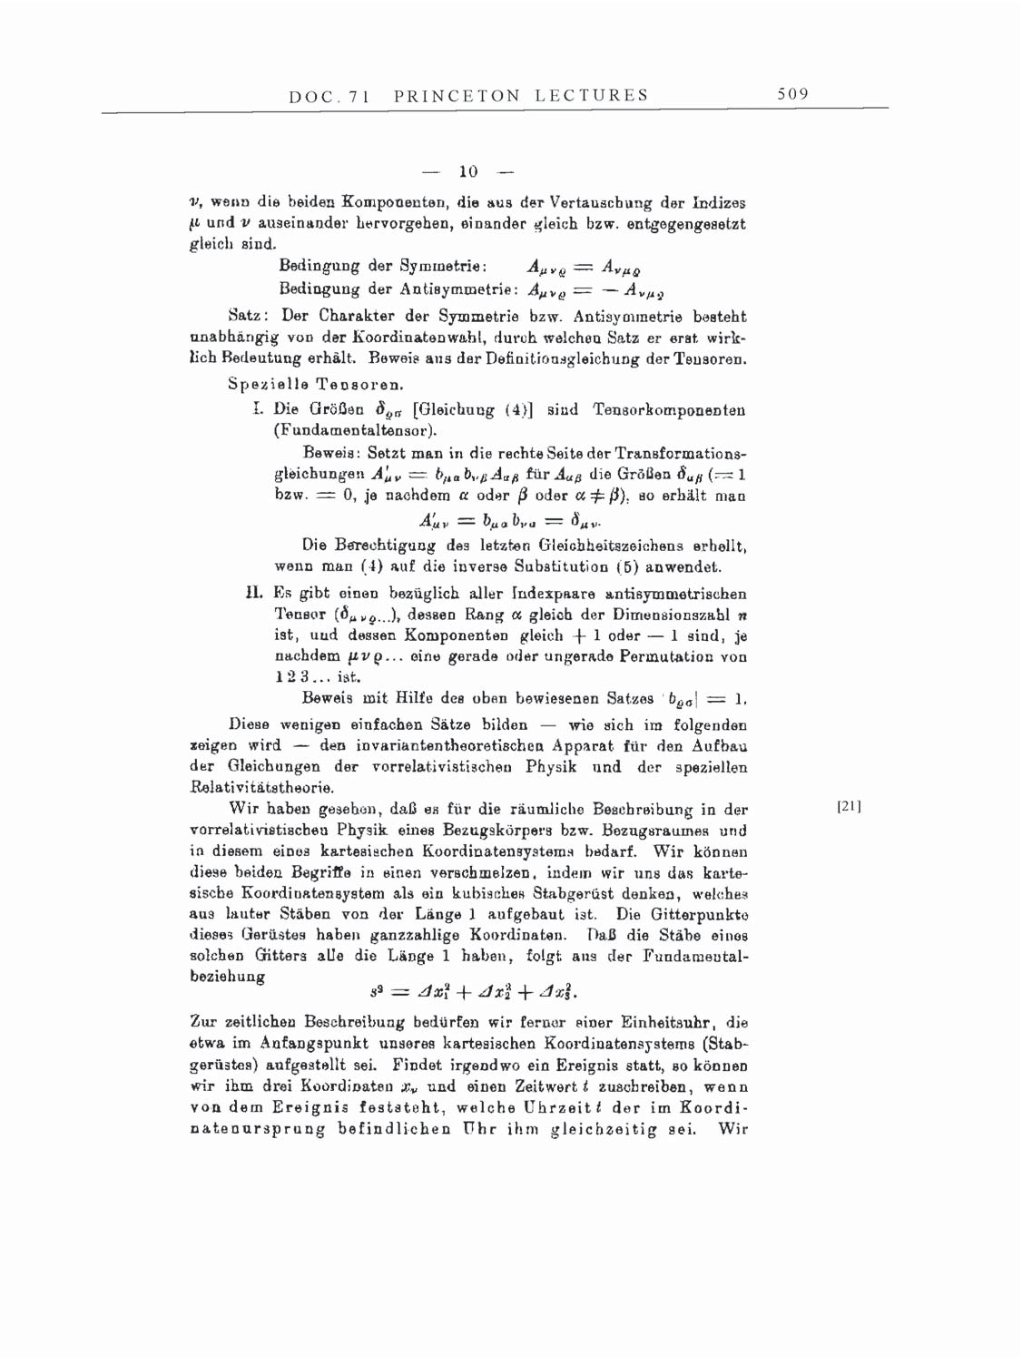 Volume 7: The Berlin Years: Writings, 1918-1921 page 509